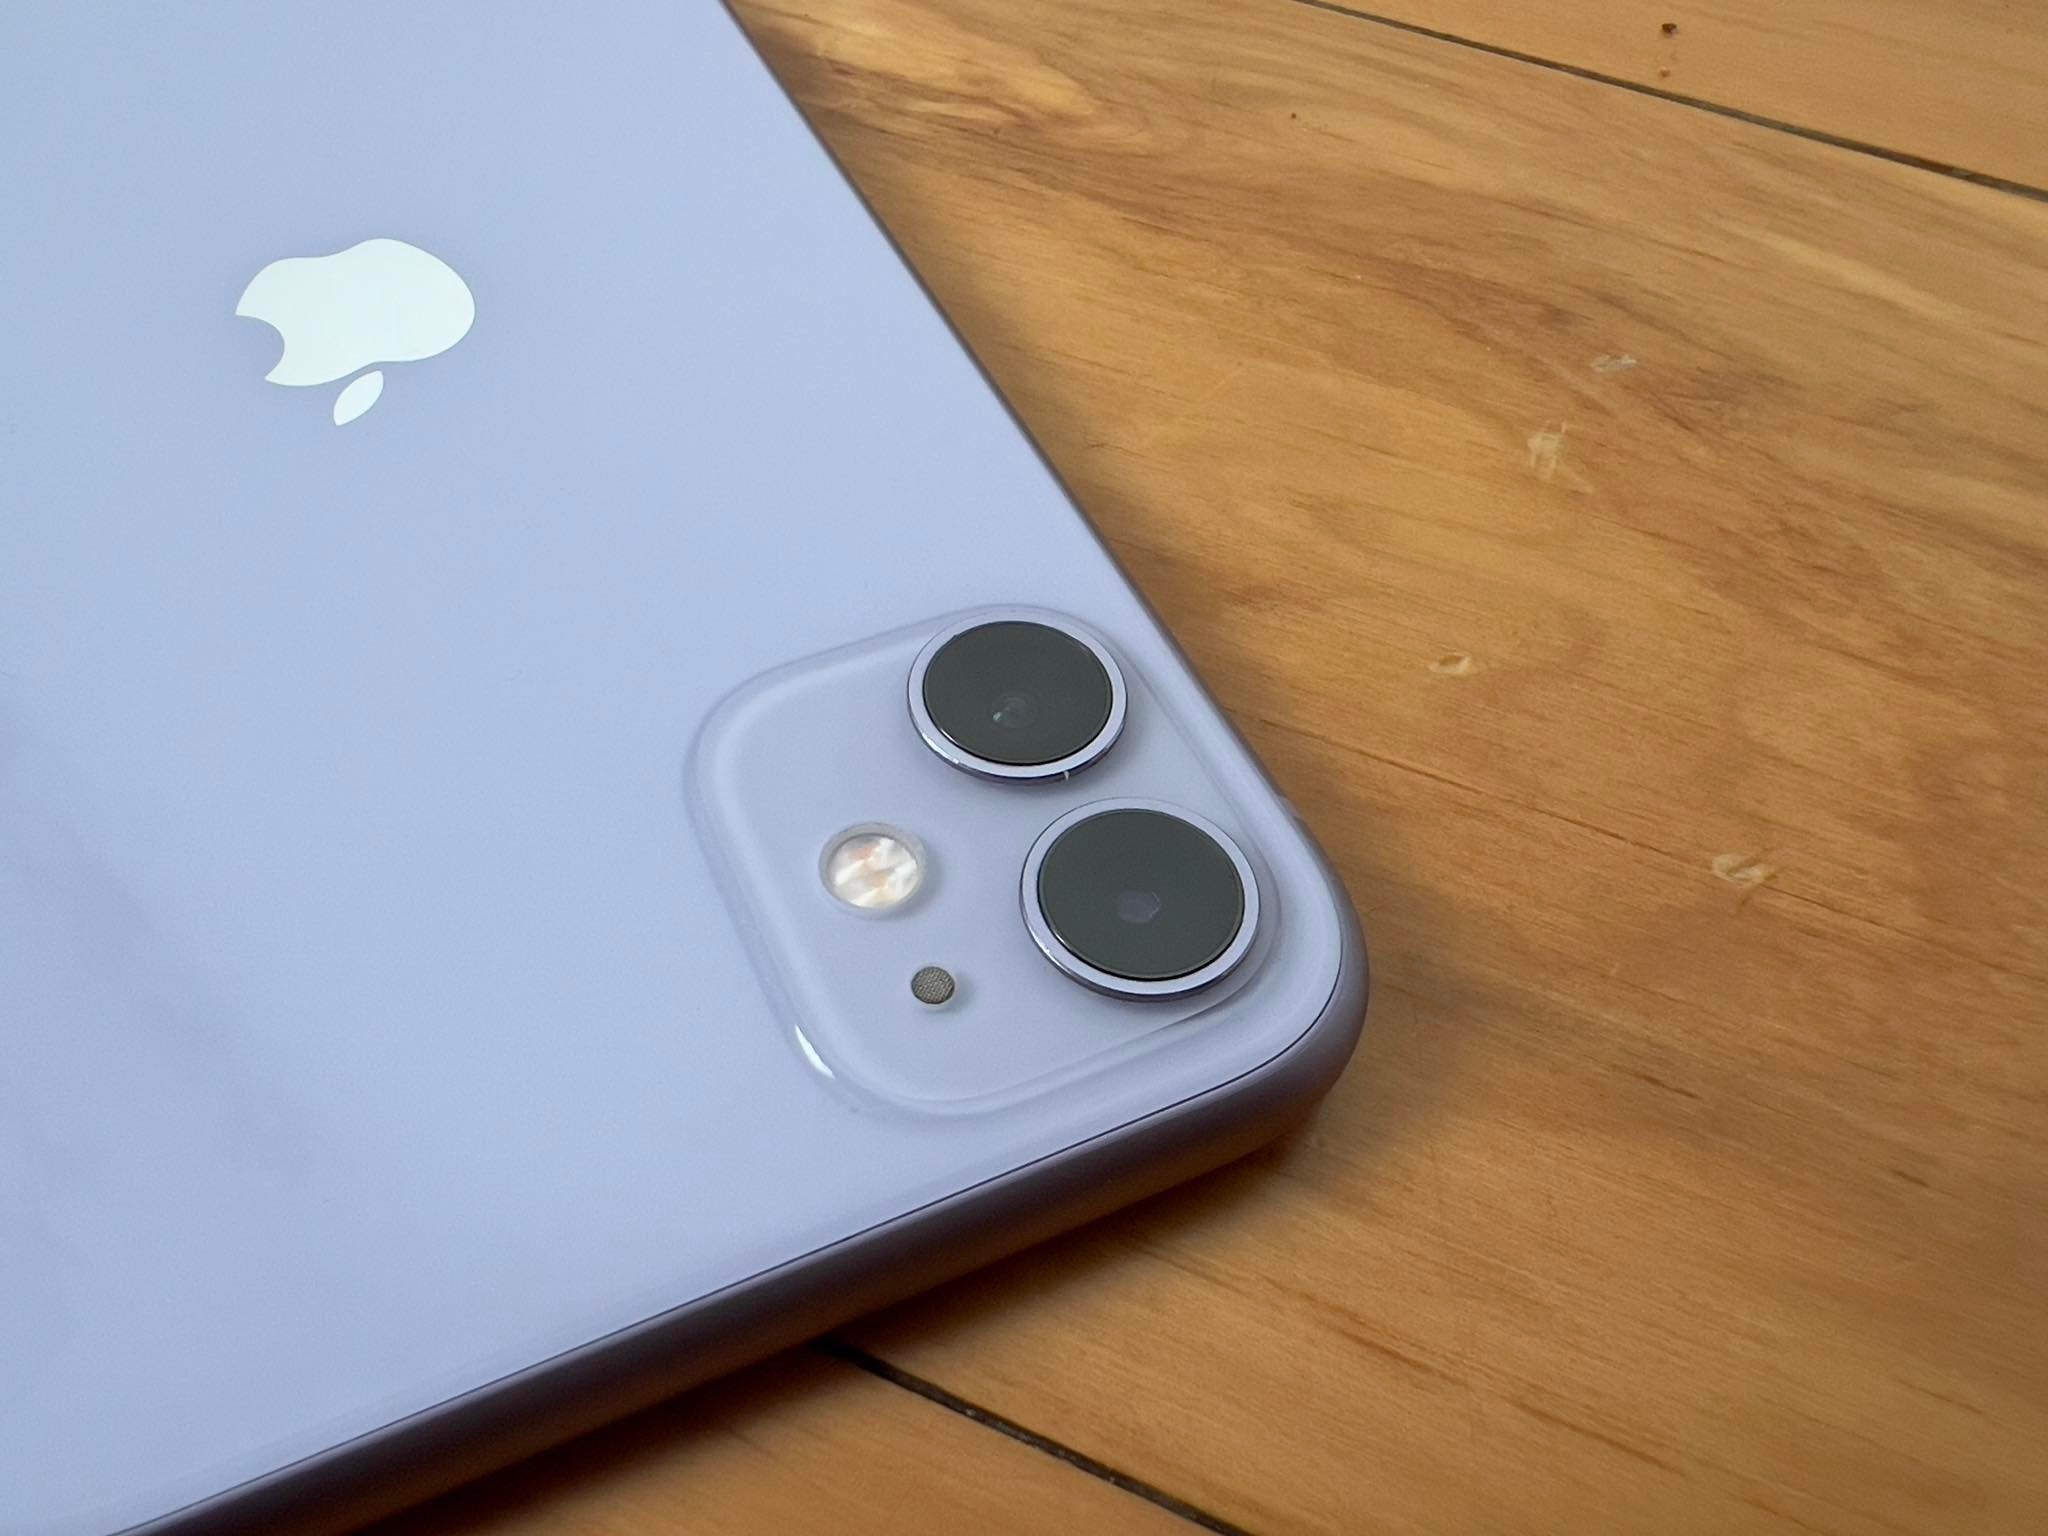 Apple iPhone 11 64GB Purple New Case, Glass Screen Protector & Shipping (Exc) Batt Serv